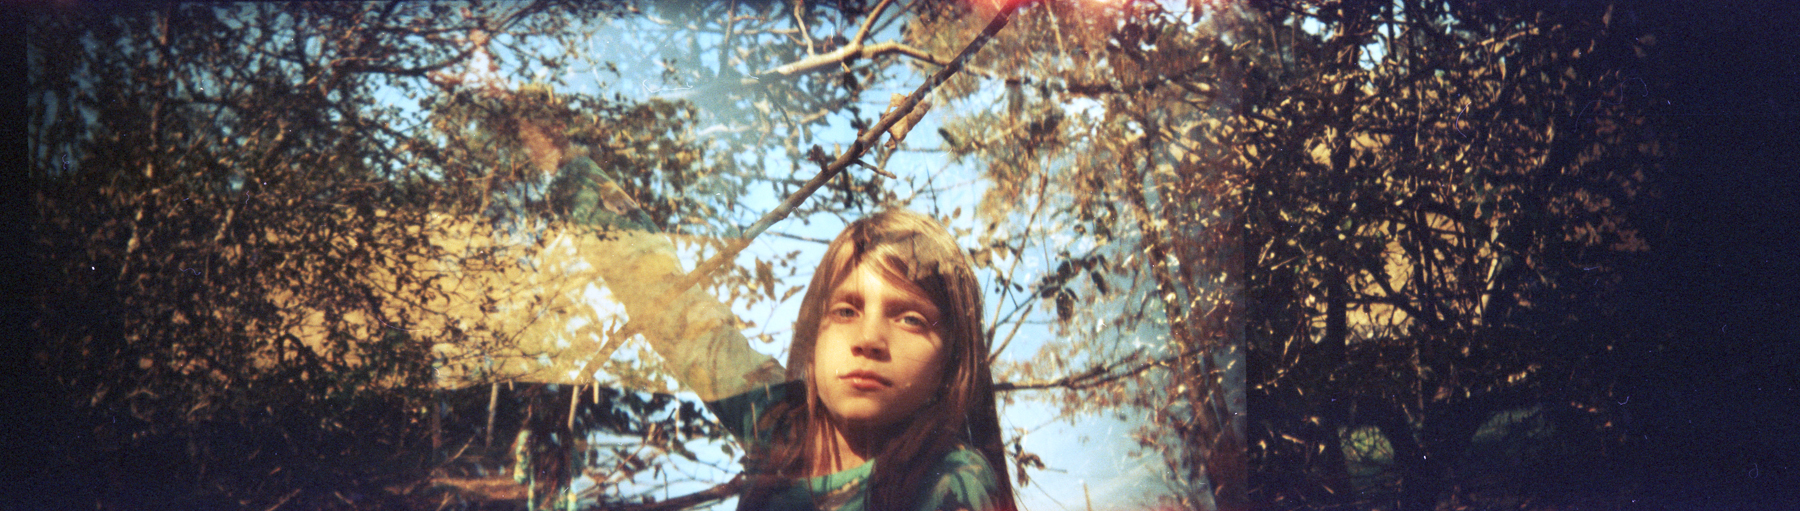 Jocelyn Mathewes | In the Trees | Holga 135